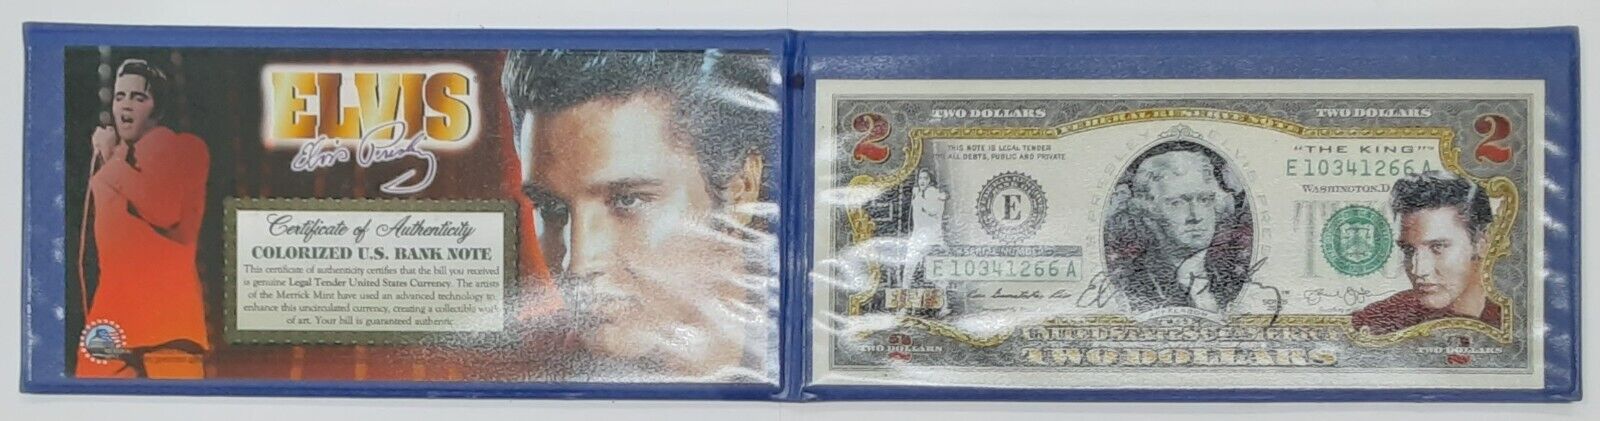 CU Colorized $2 FRN Commemorating Elvis Presley "The King"  in Folder